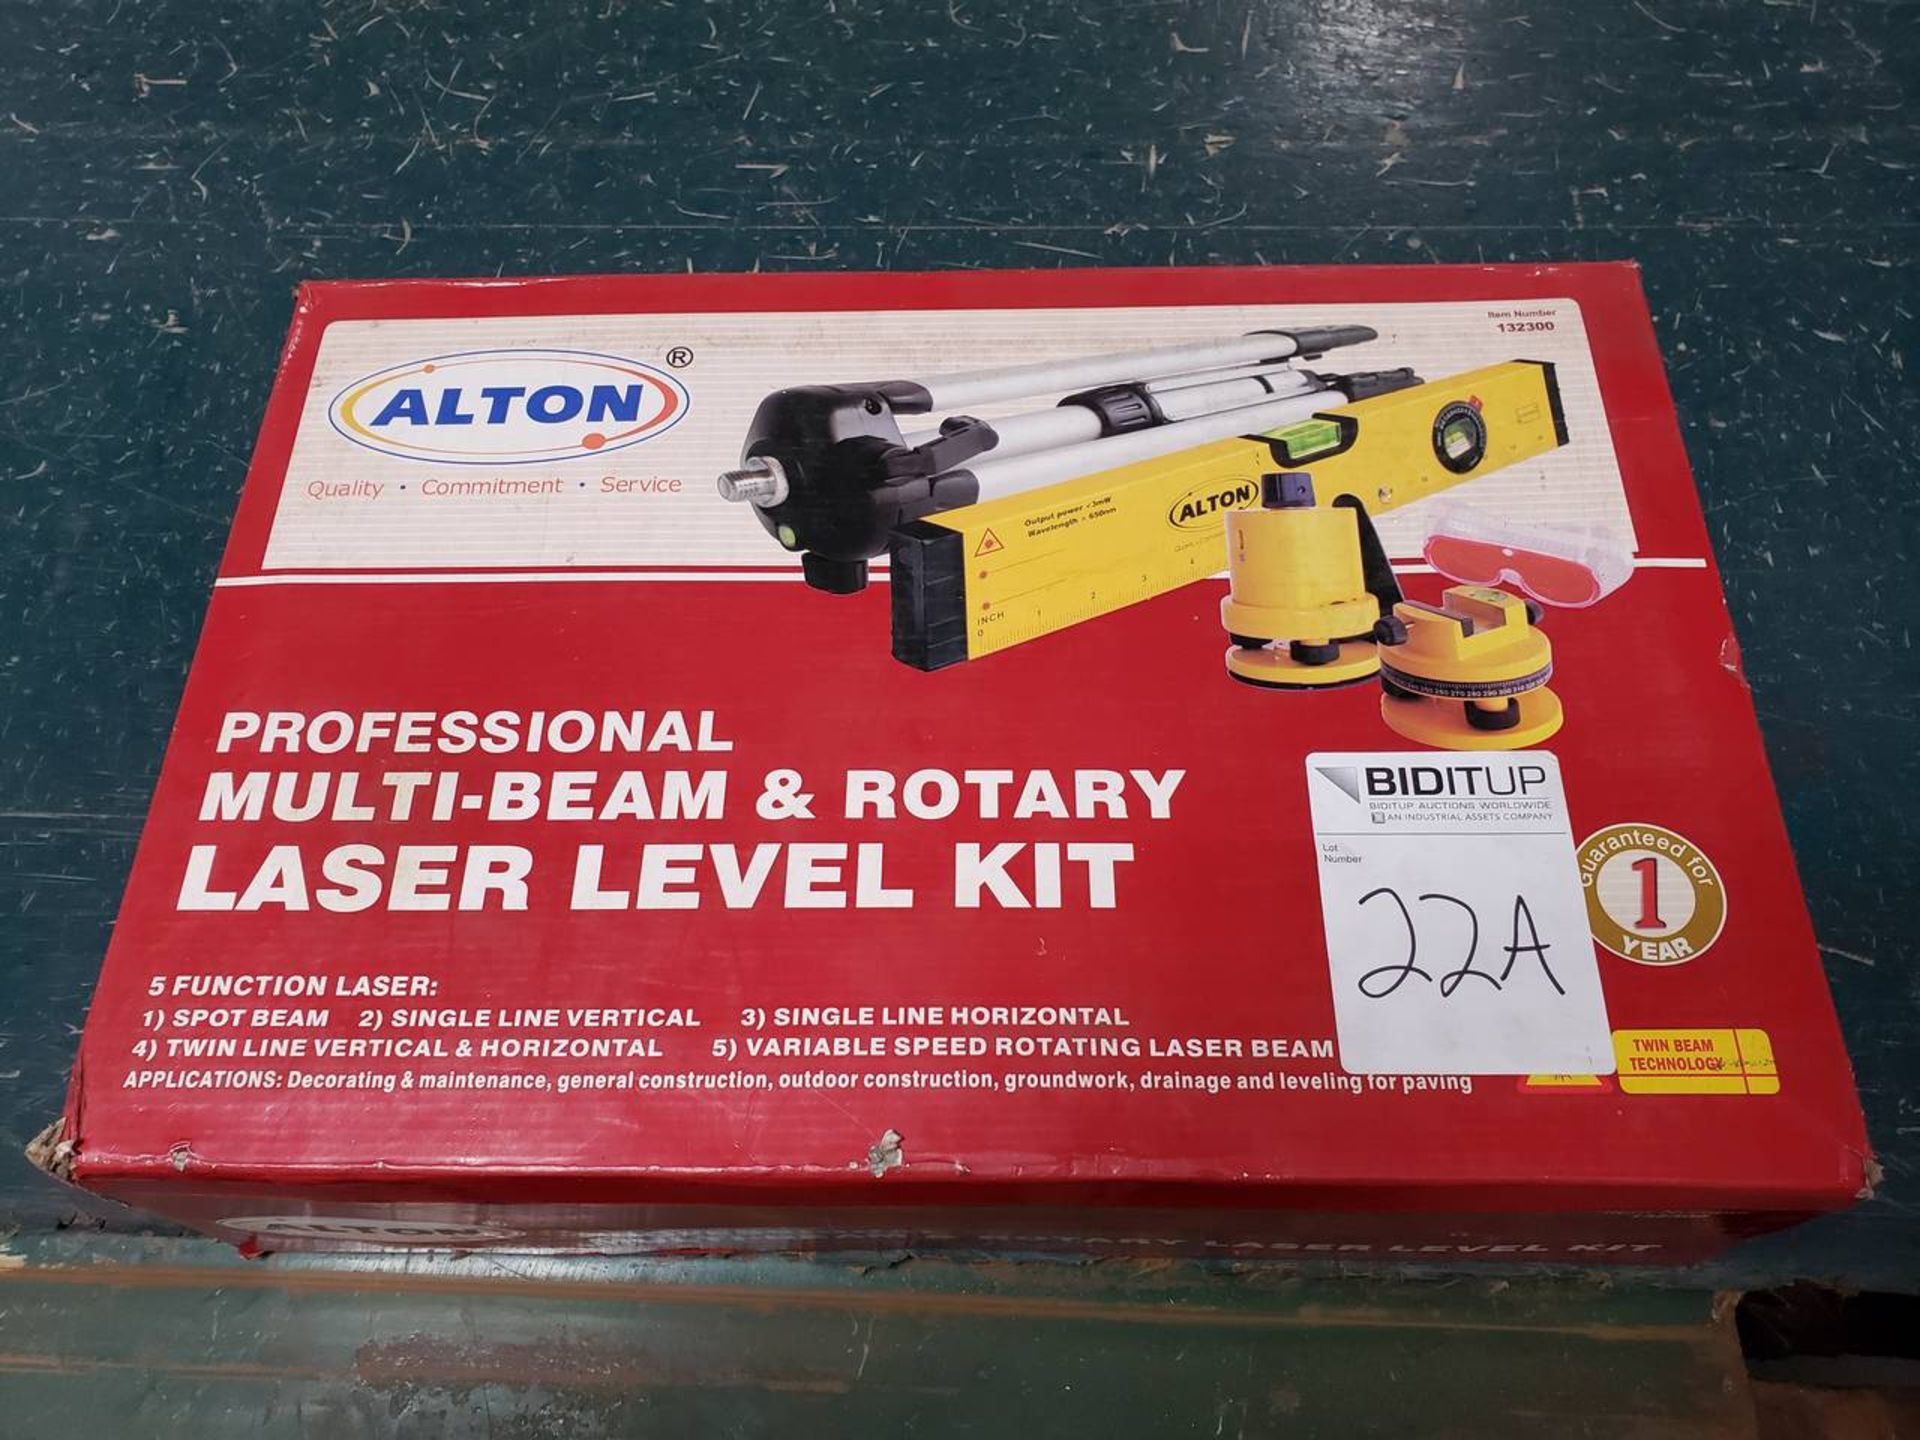 Alton 132300 Multi Beam & Rotary Laser Level Kit